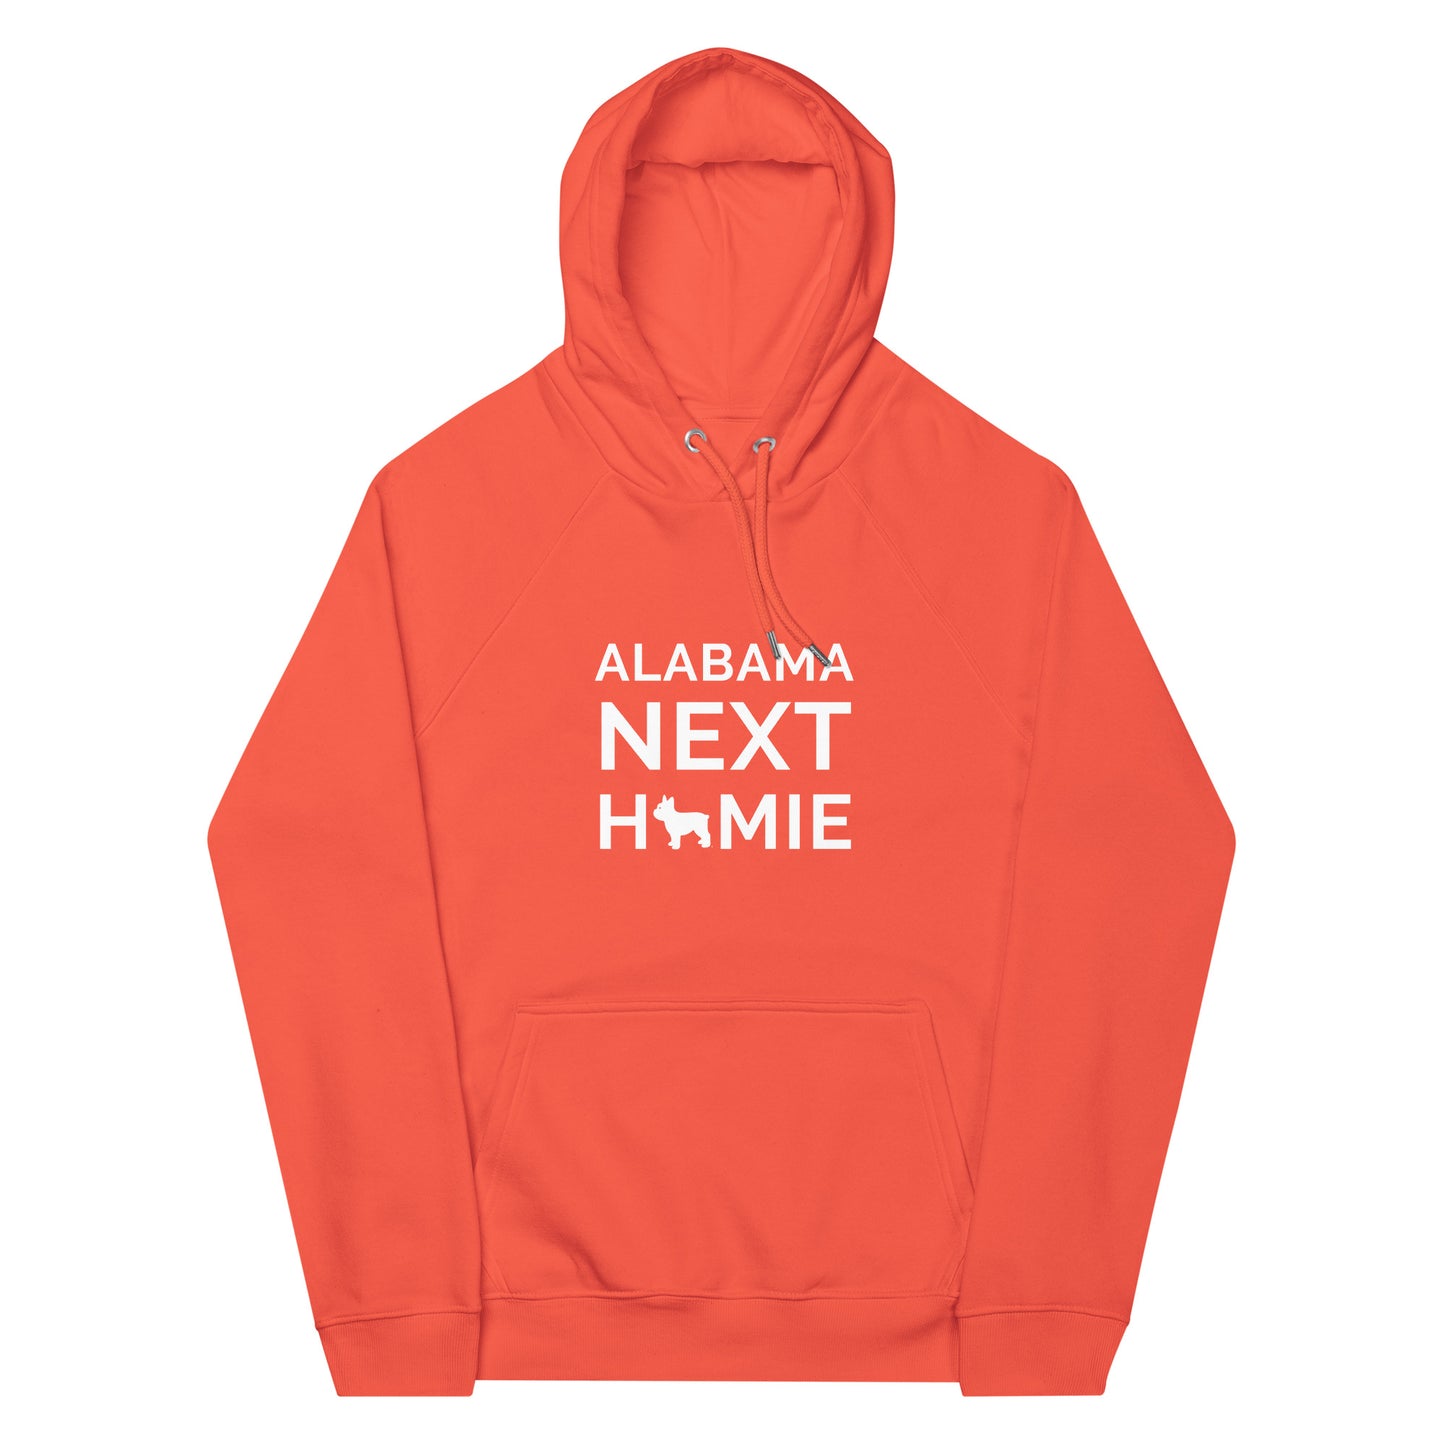 Alabama NextHomie Unisex eco raglan hoodie